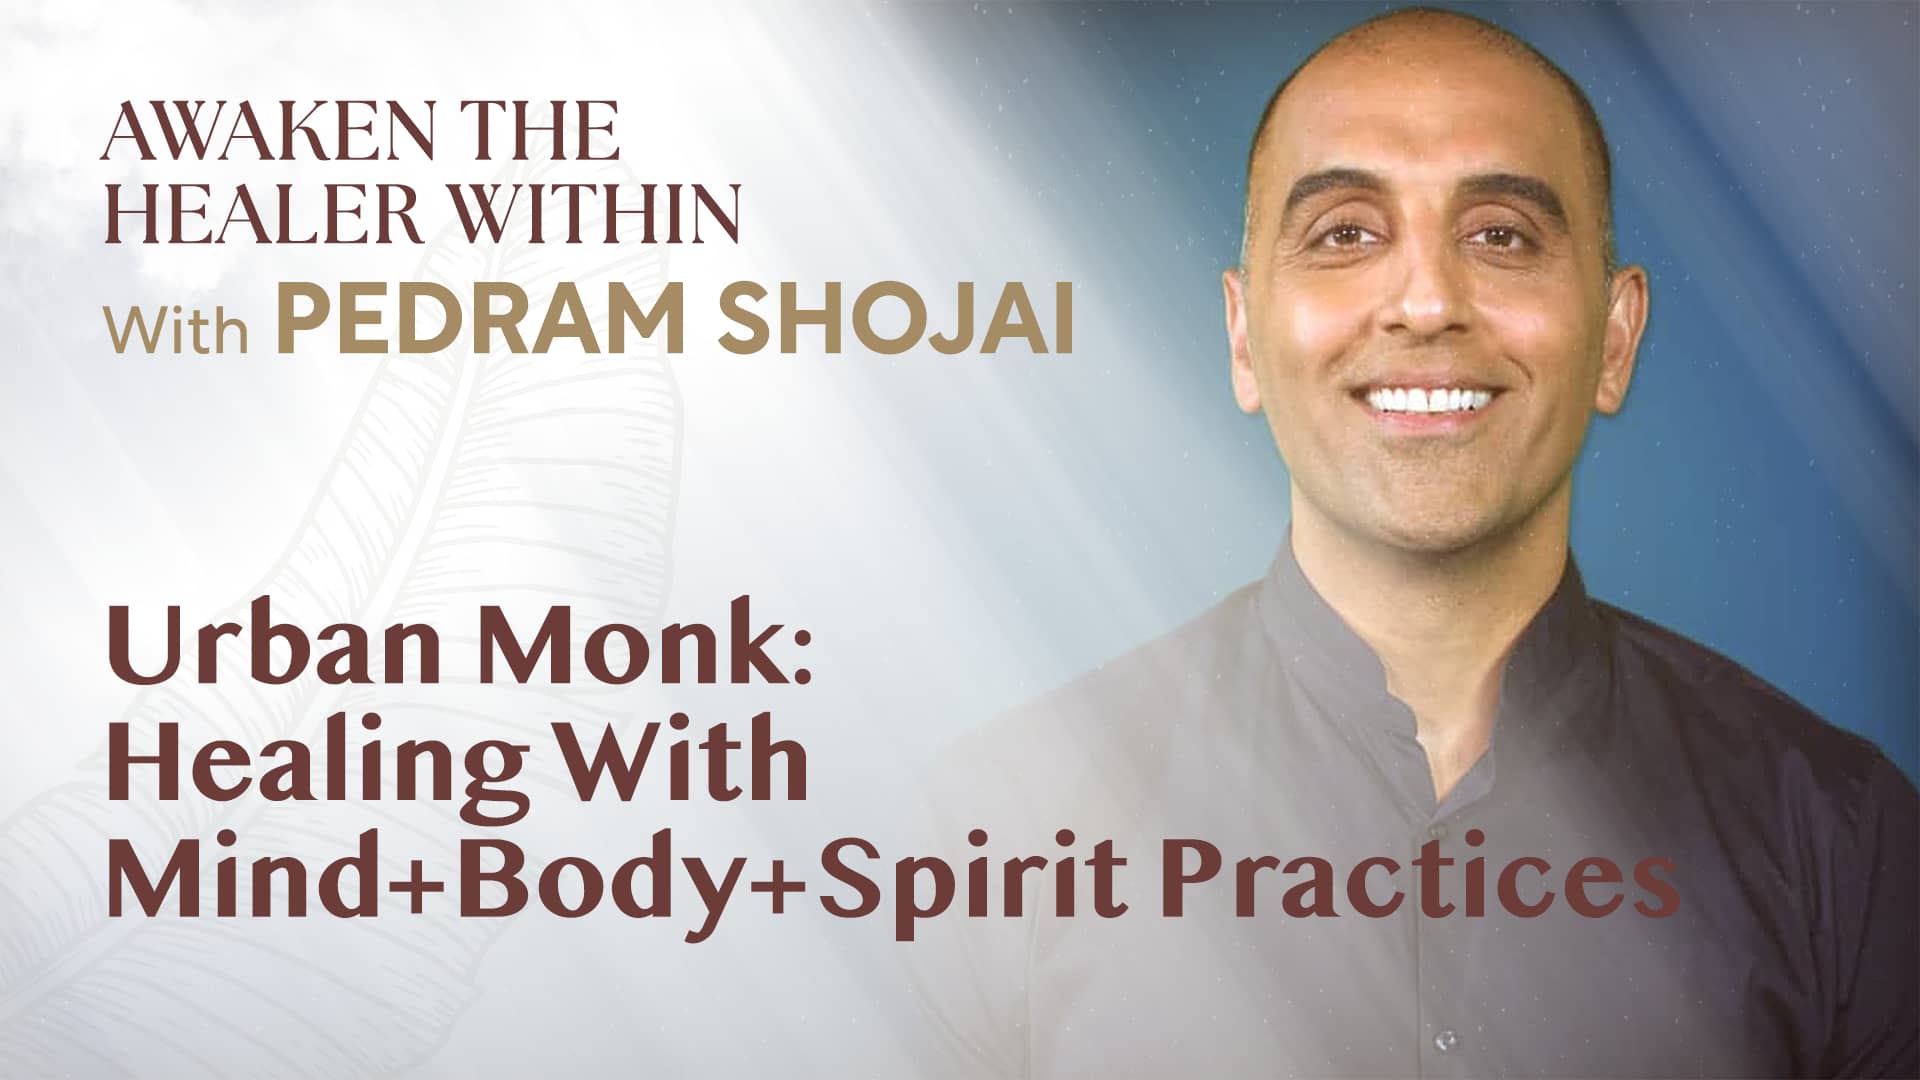 Urban Monk: Healing With Mind+Body+Spirit Practices